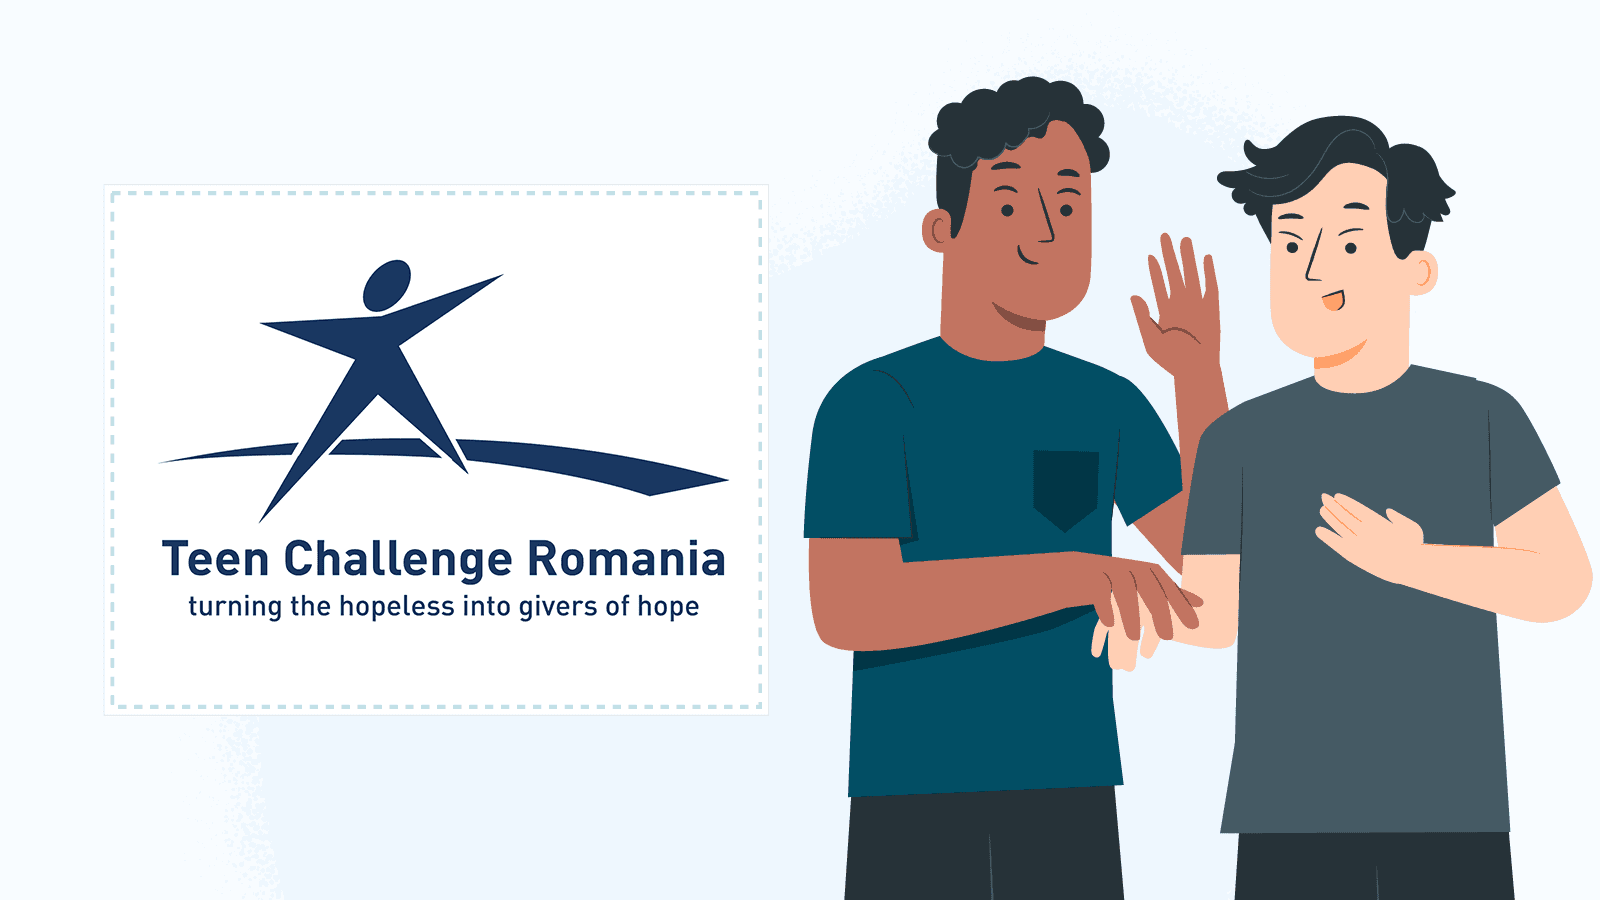 8. Teen Challenge Romania